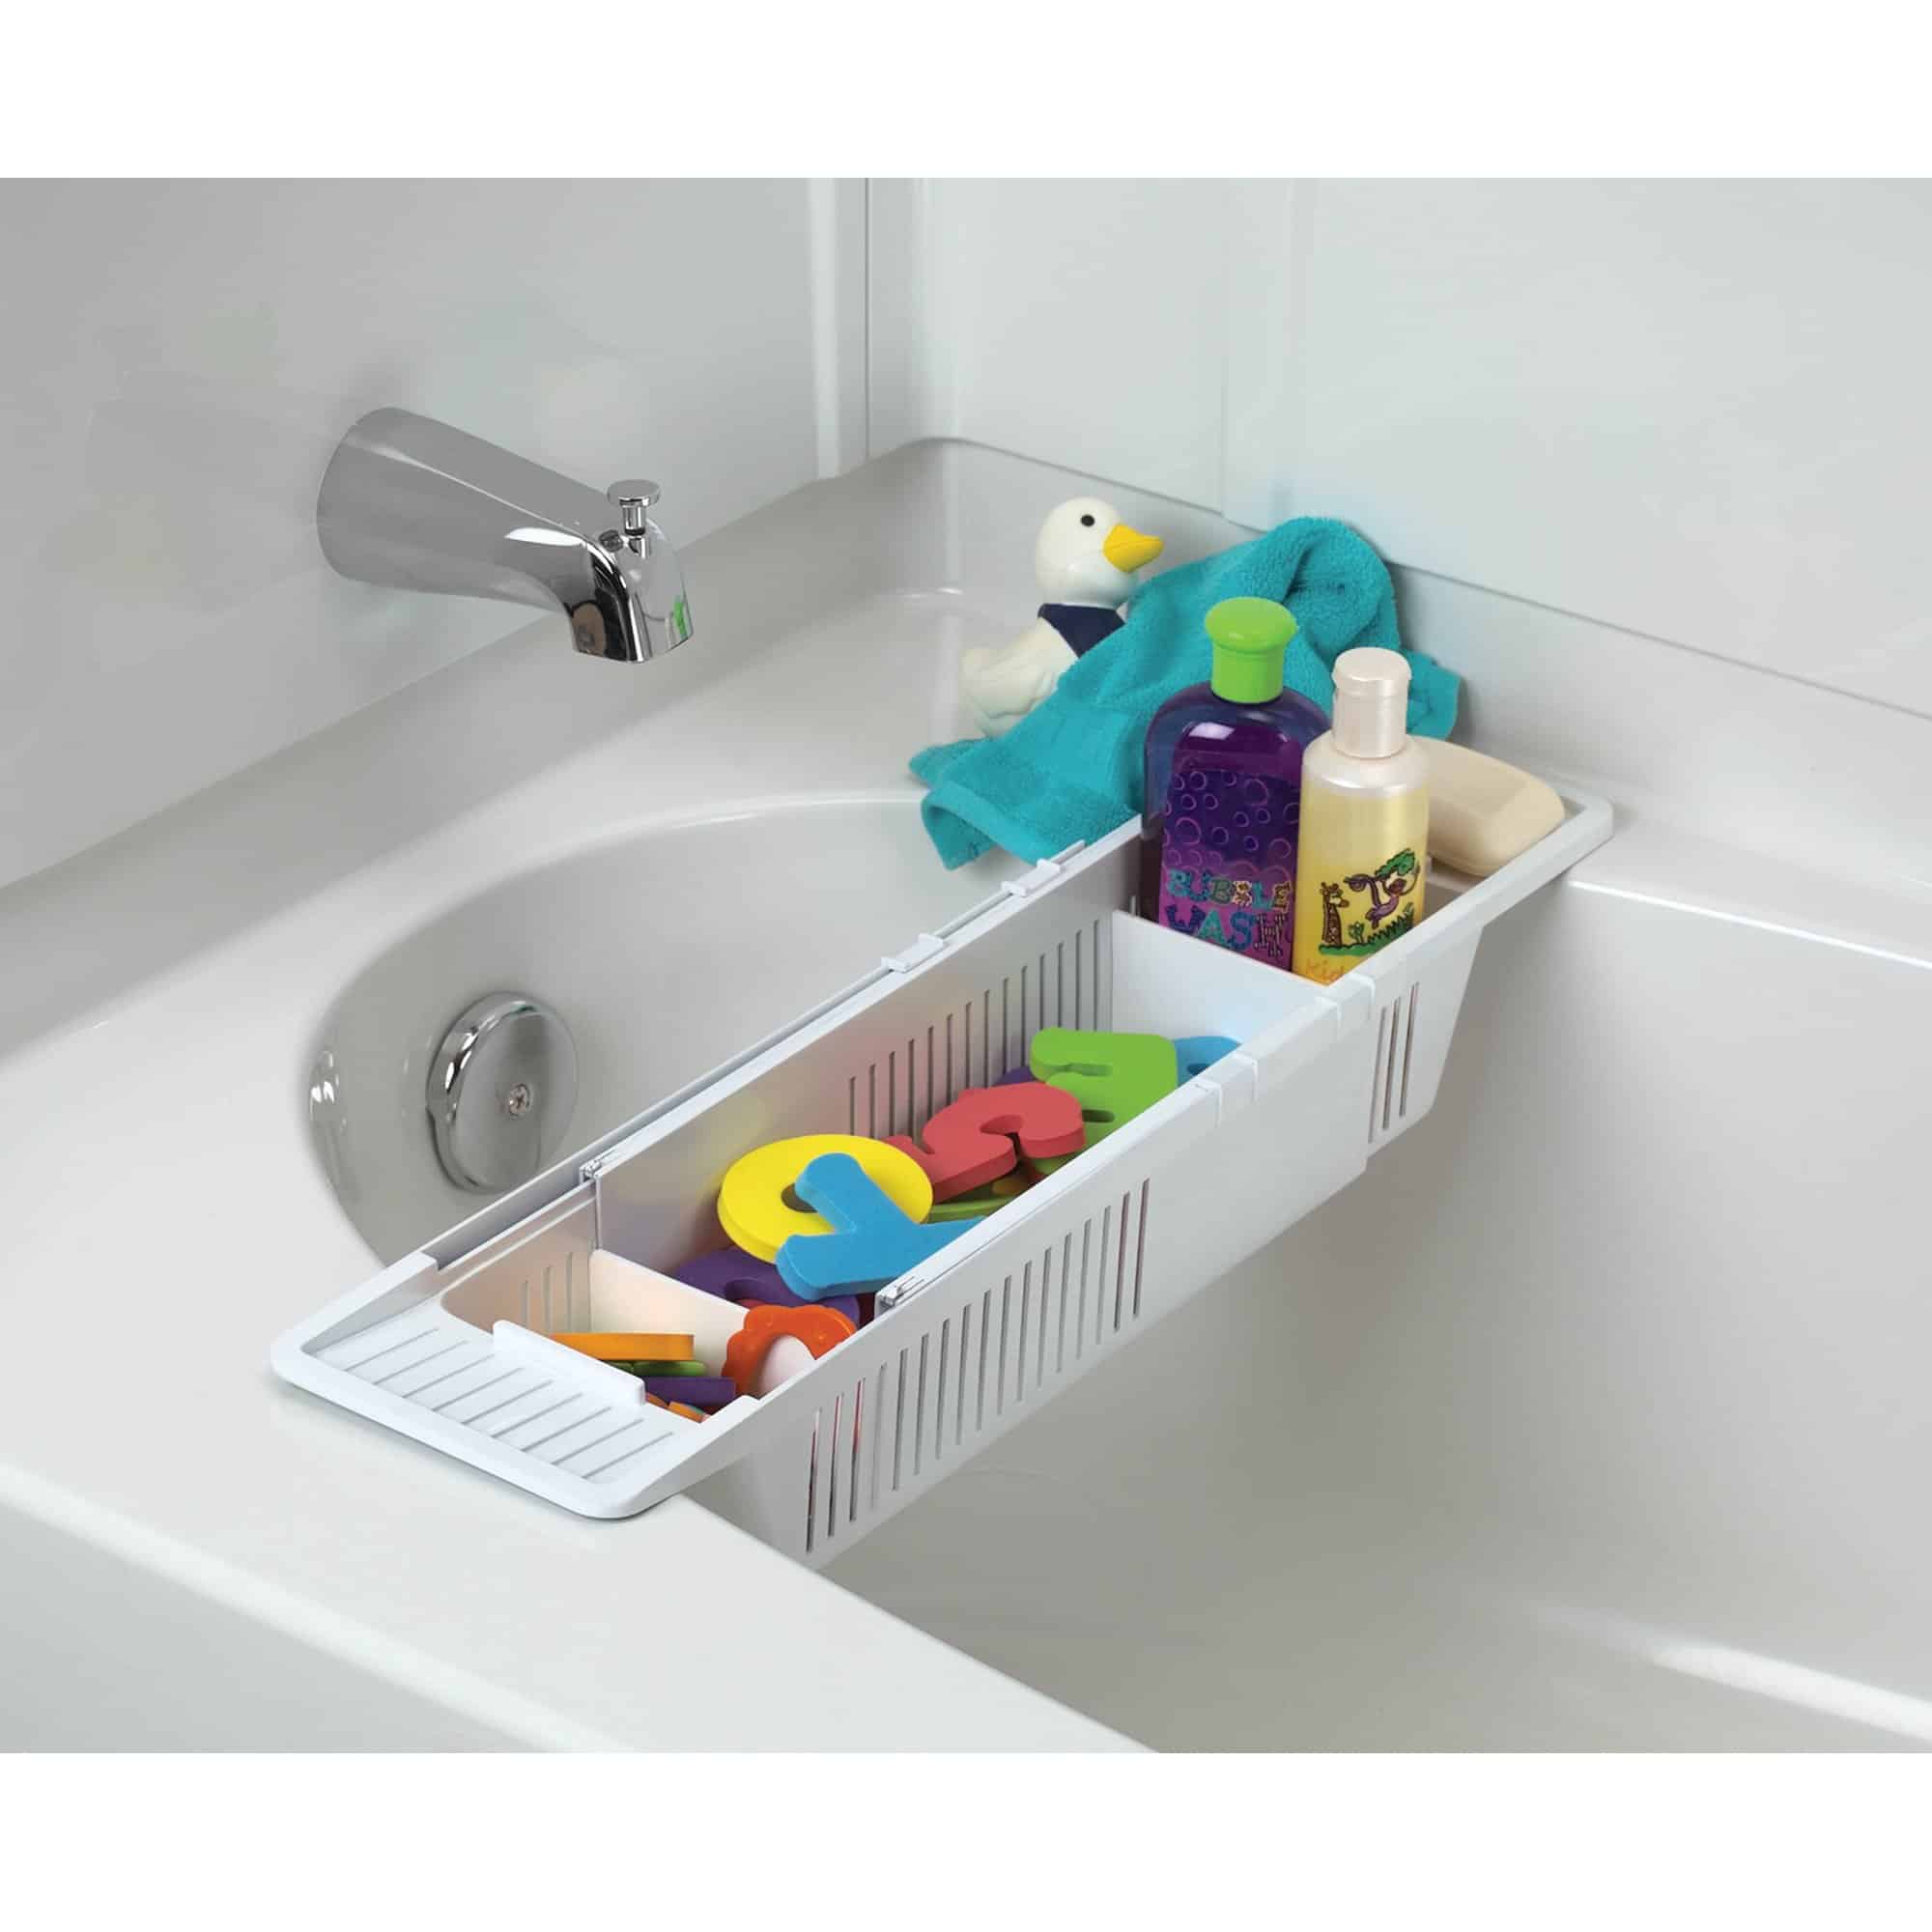 Stylish Bathtub Toy Storage that Transforms for Guest Luxury